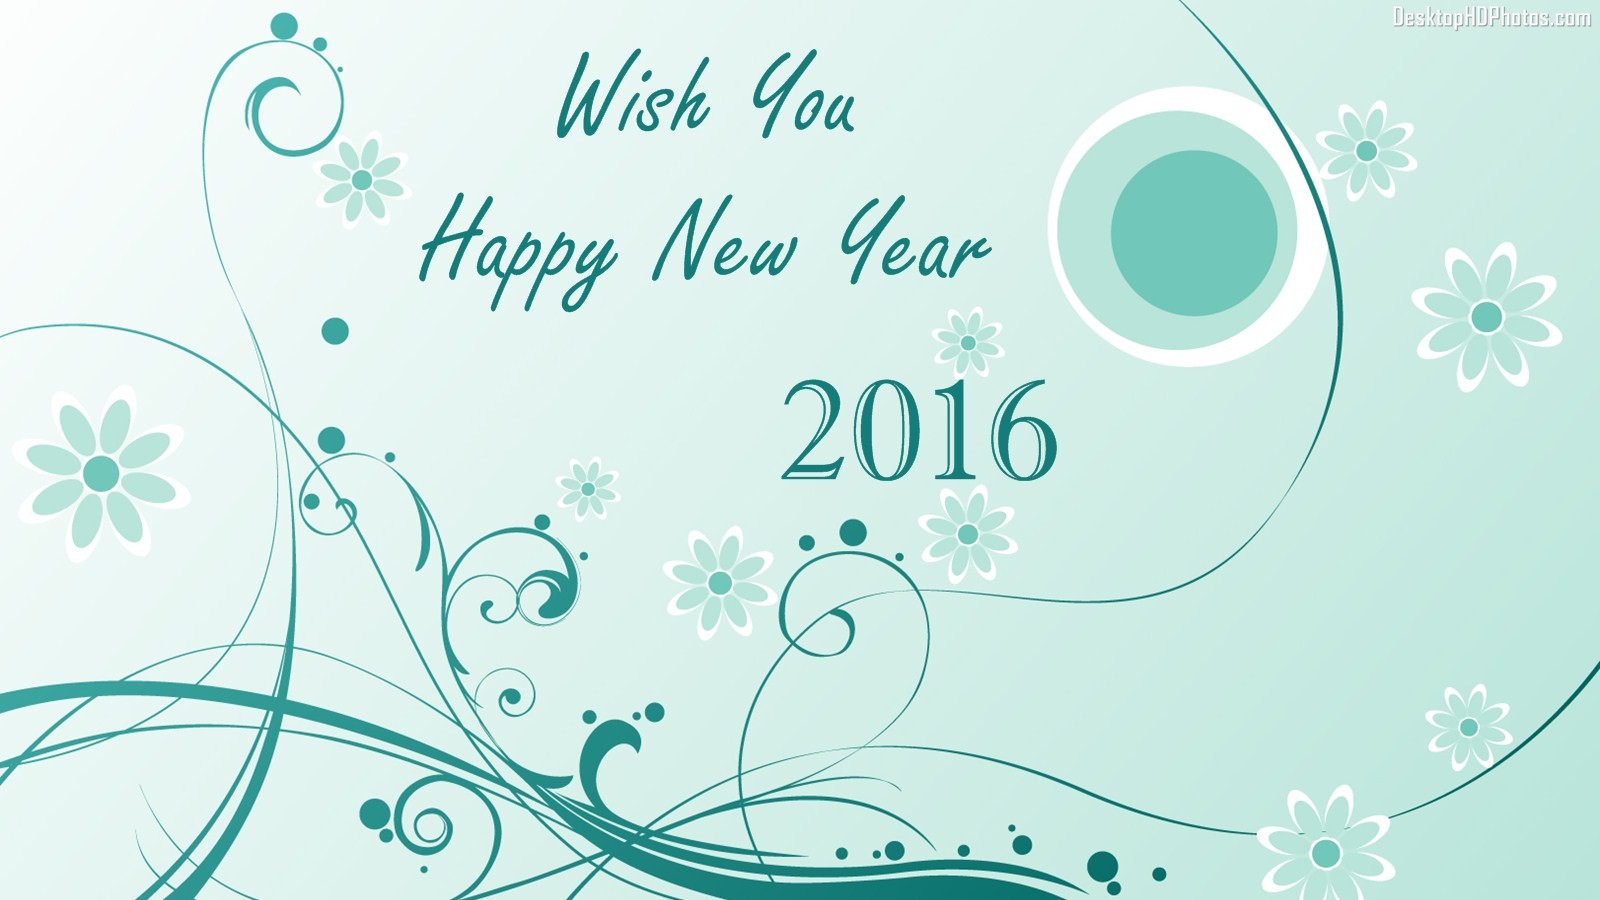 Wish You Happy New Year 2016